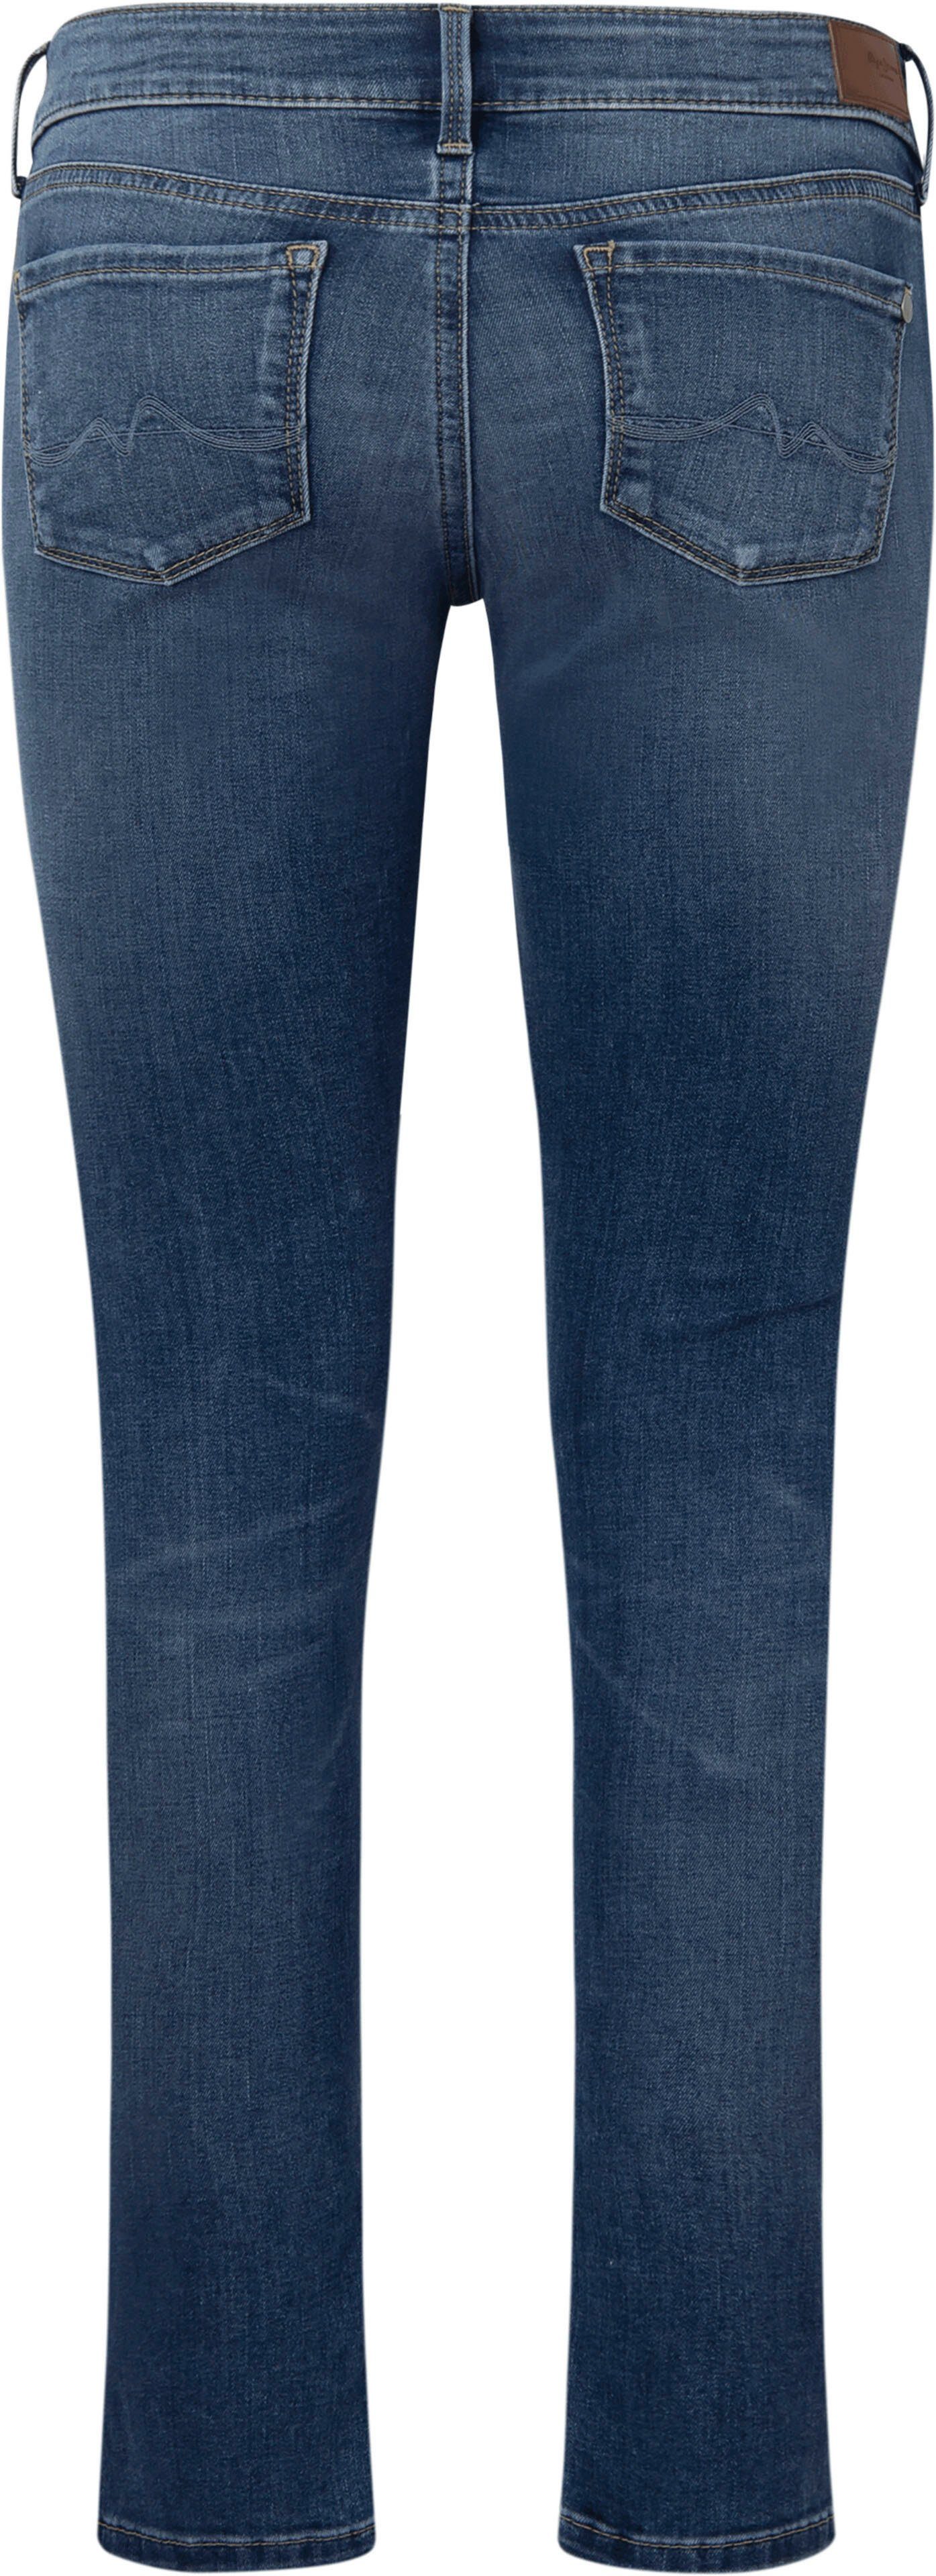 Pepe Jeans und Stretch-Anteil blue 5-Pocket-Stil Skinny-fit-Jeans im mit SOHO Bund 1-Knopf